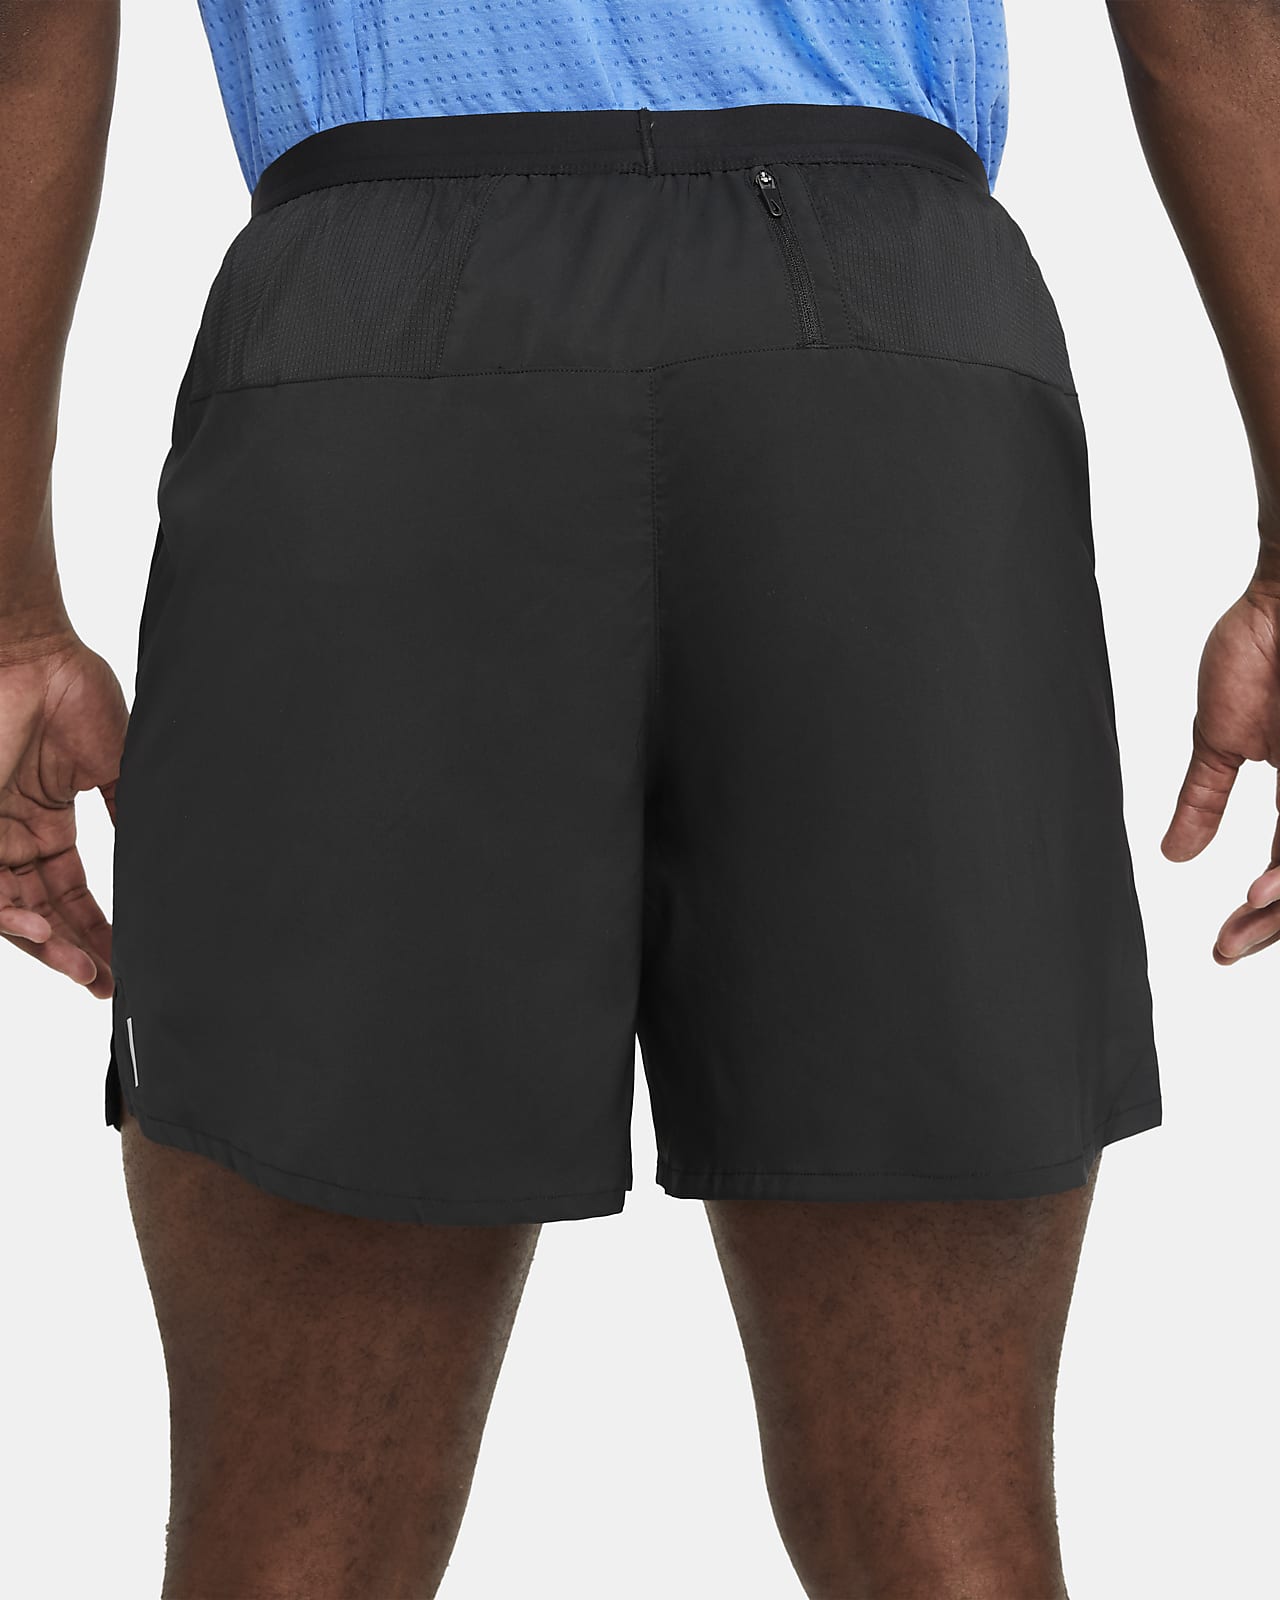 nike running shorts back pocket